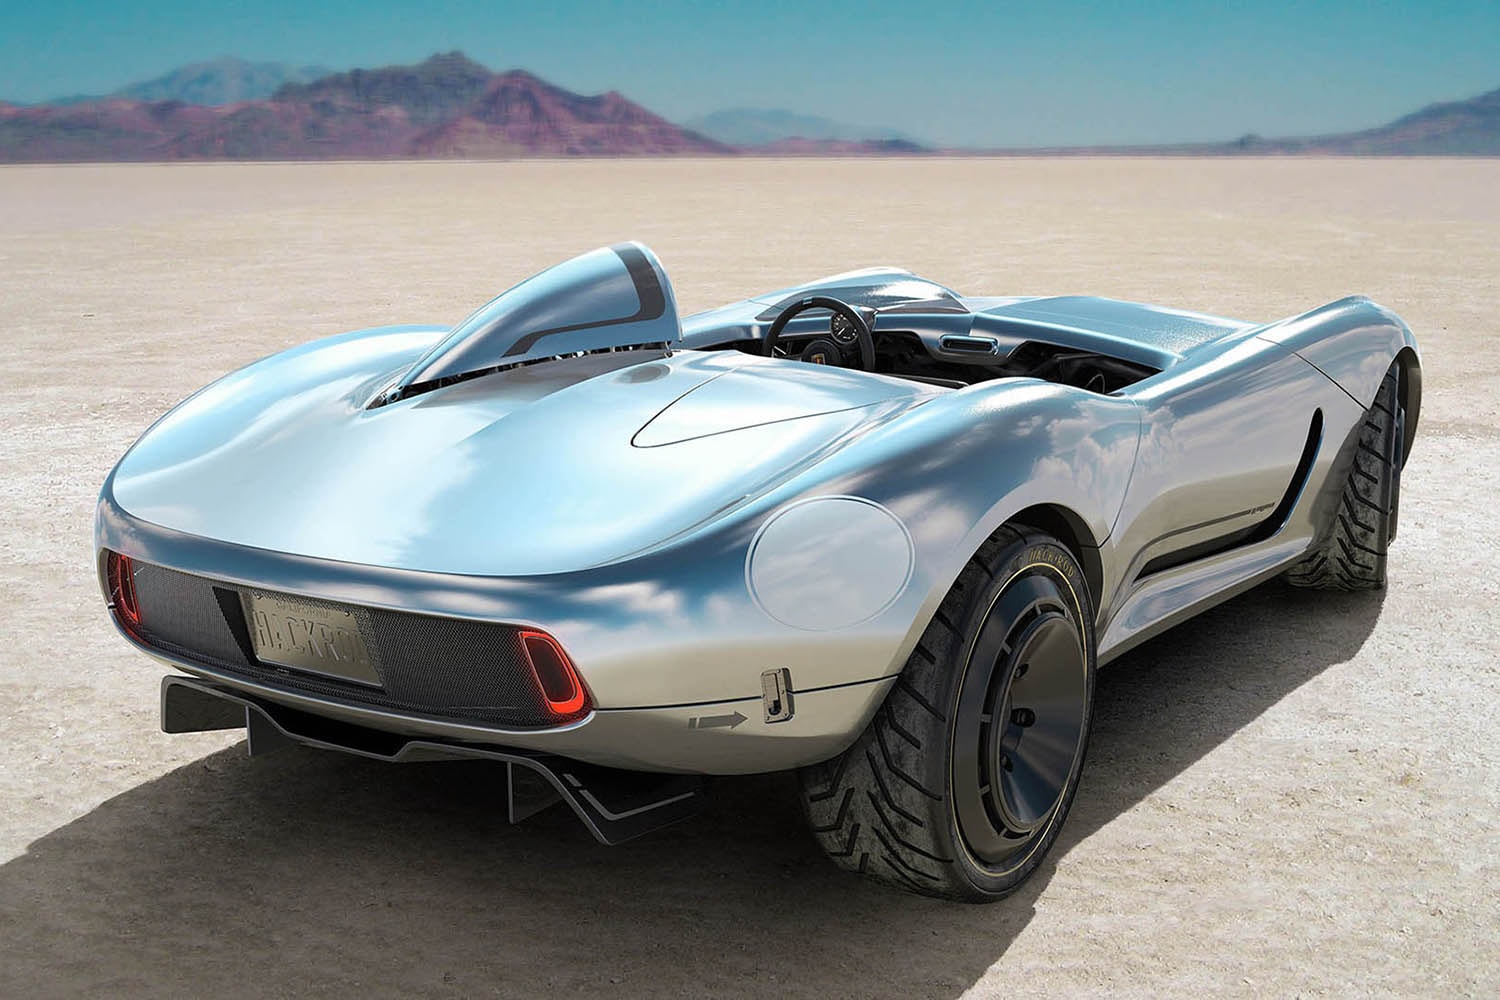 Hackrod Siemens Virtual Reality Designed 3D Printed Car video automotive vehicles